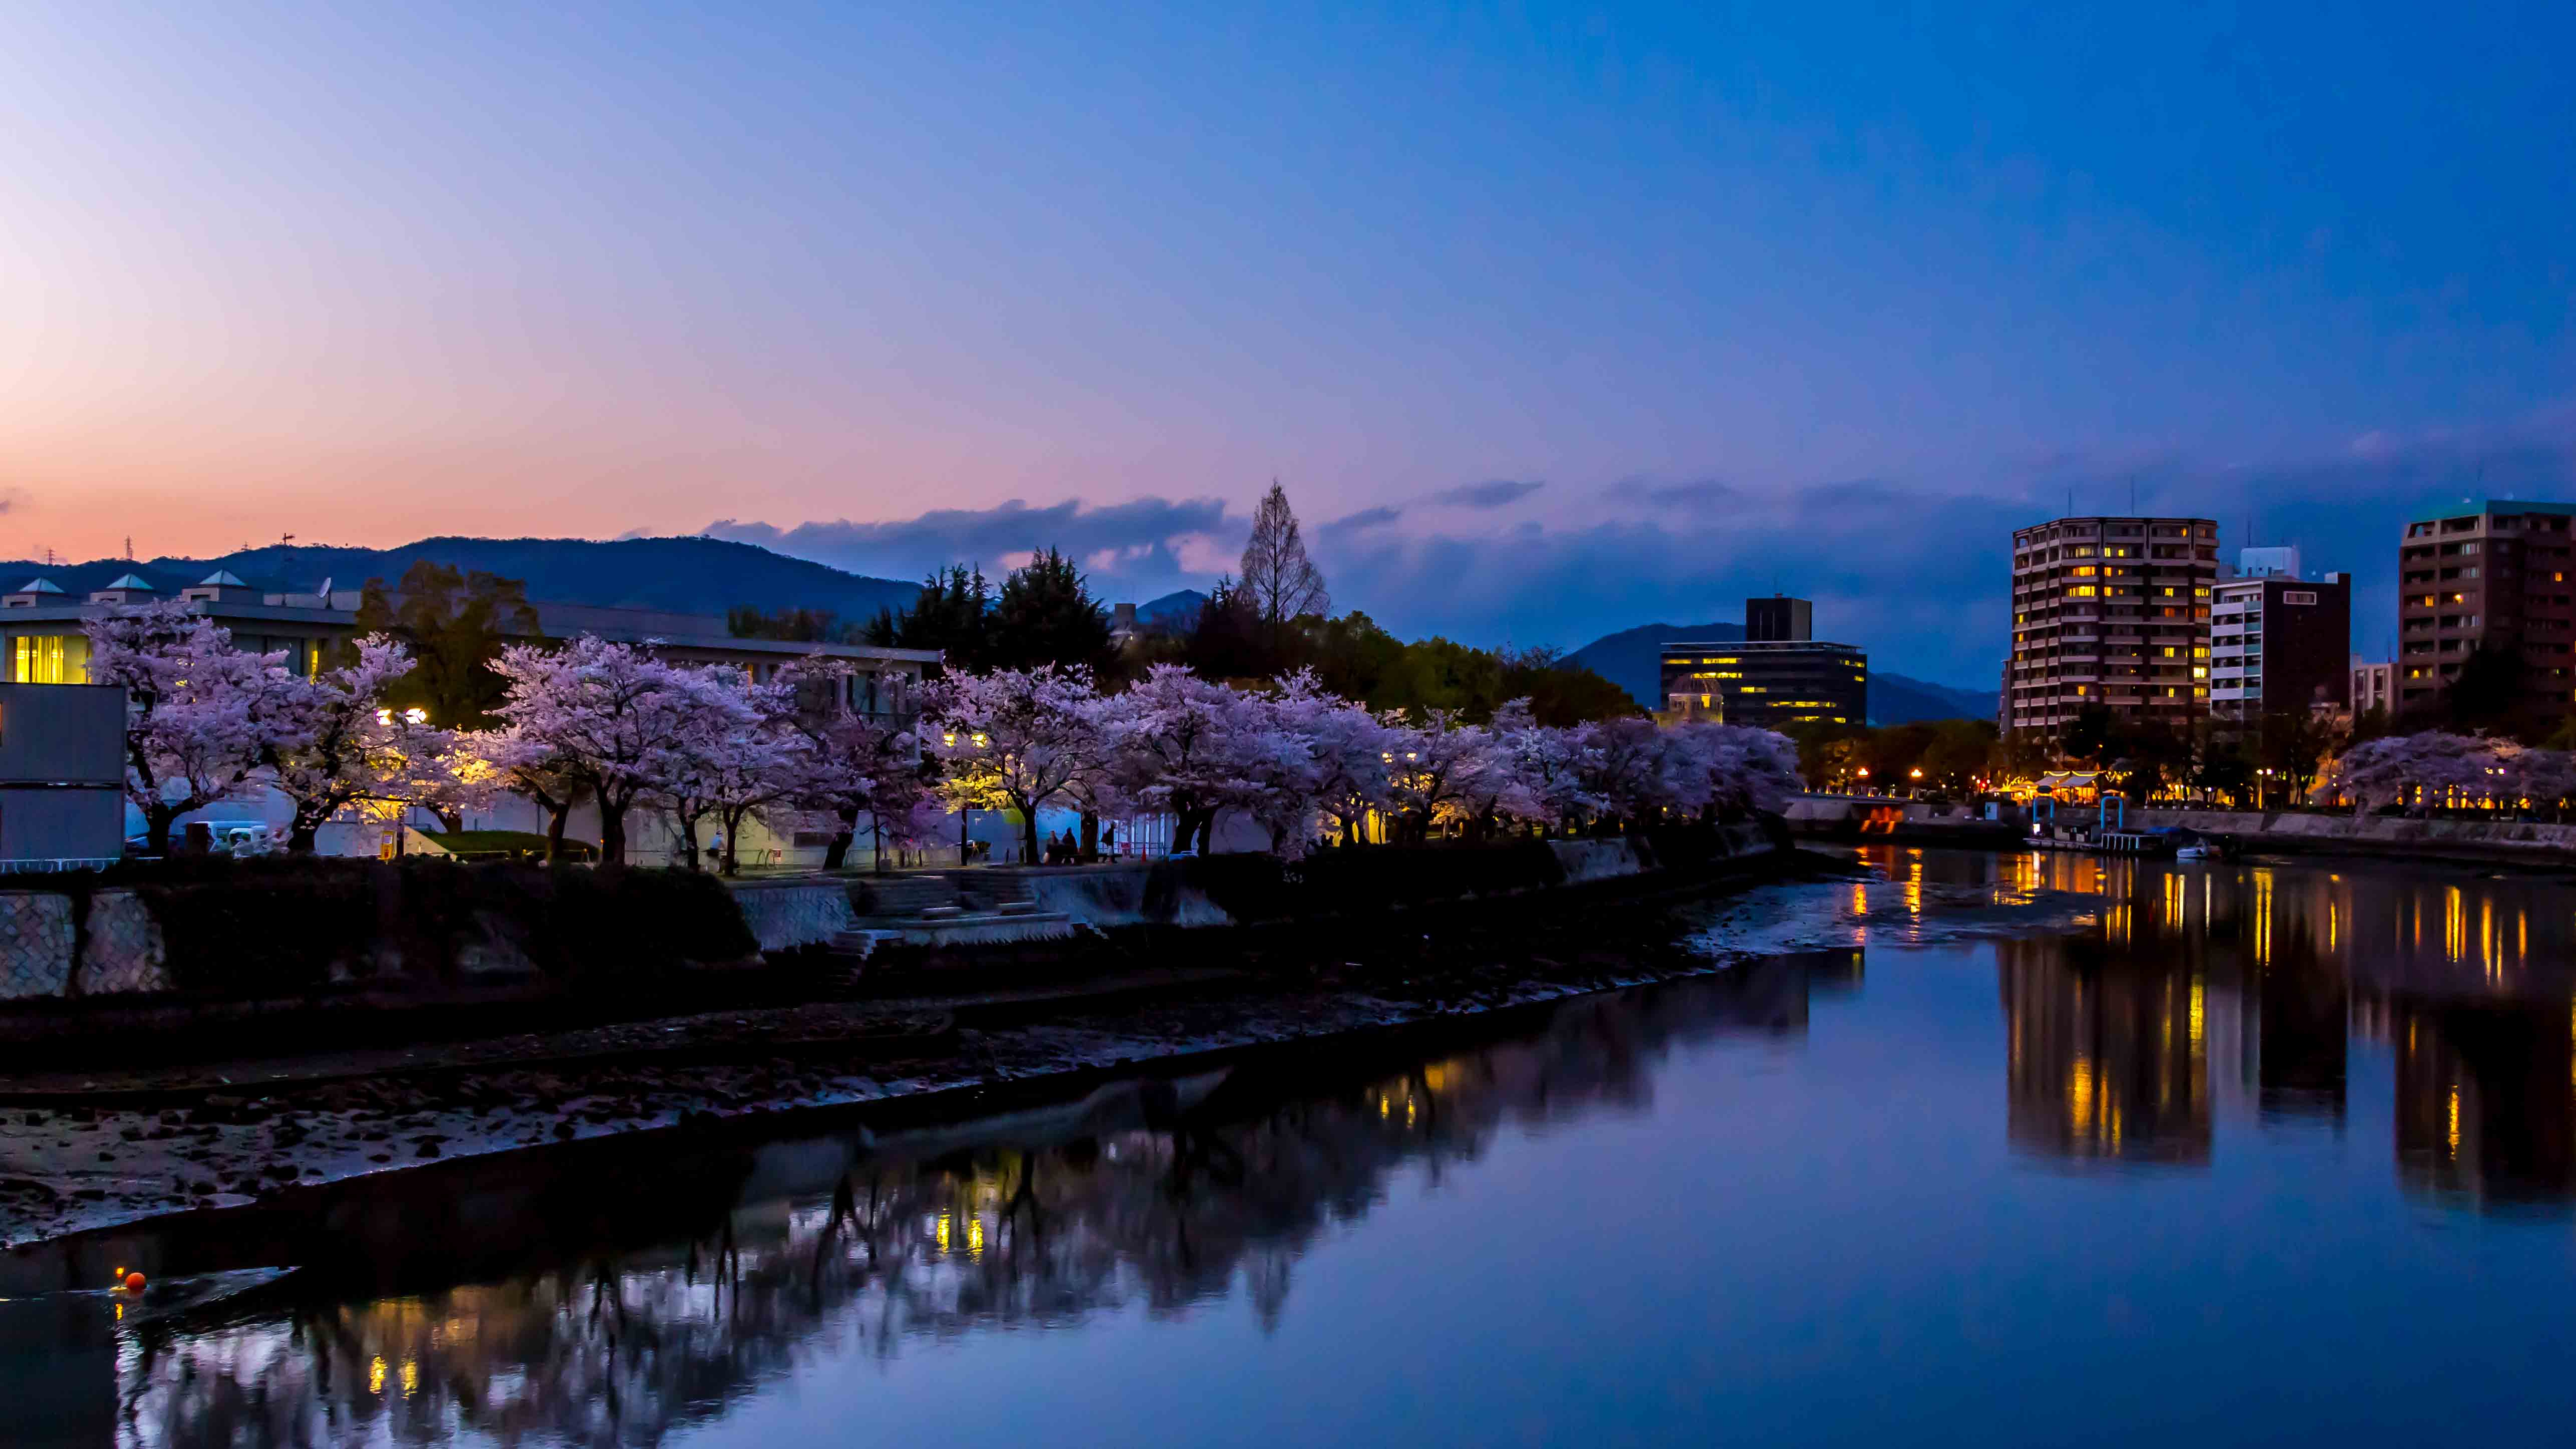 Hiroshima at sunste during cherry blossom season.